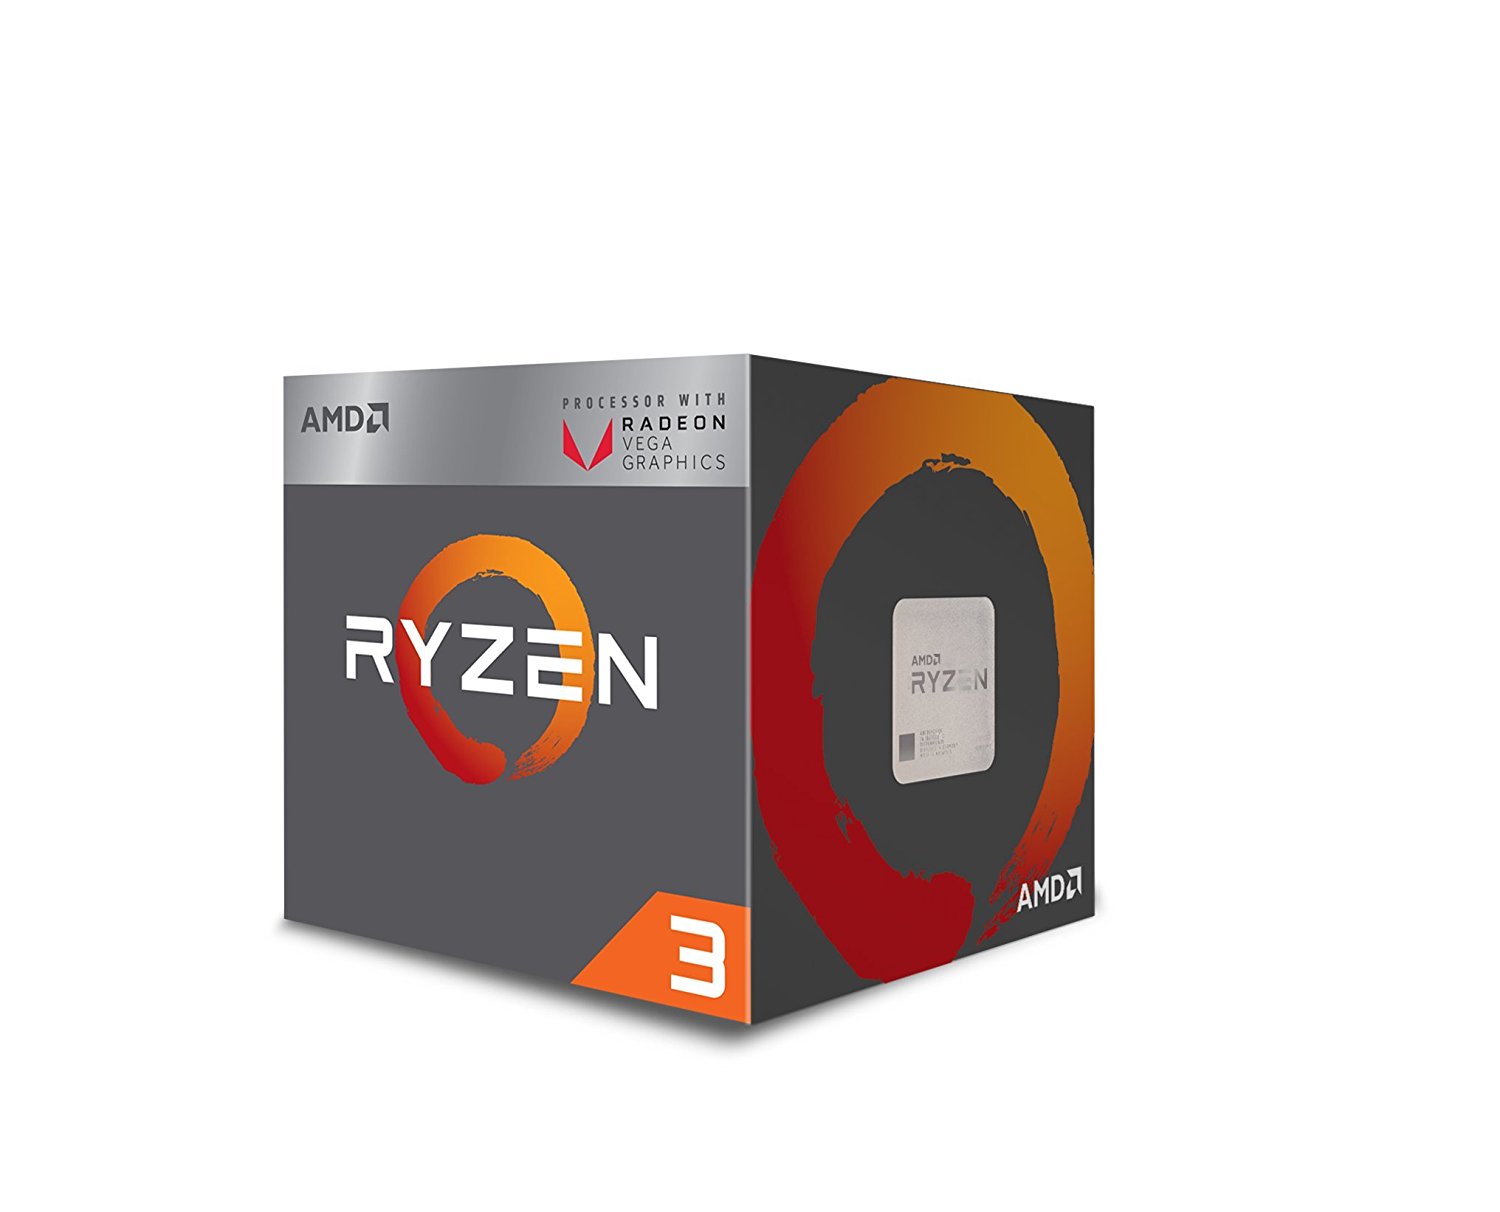 Procesor AMD Ryzen 3 2200G 3.50 GHz 6MB